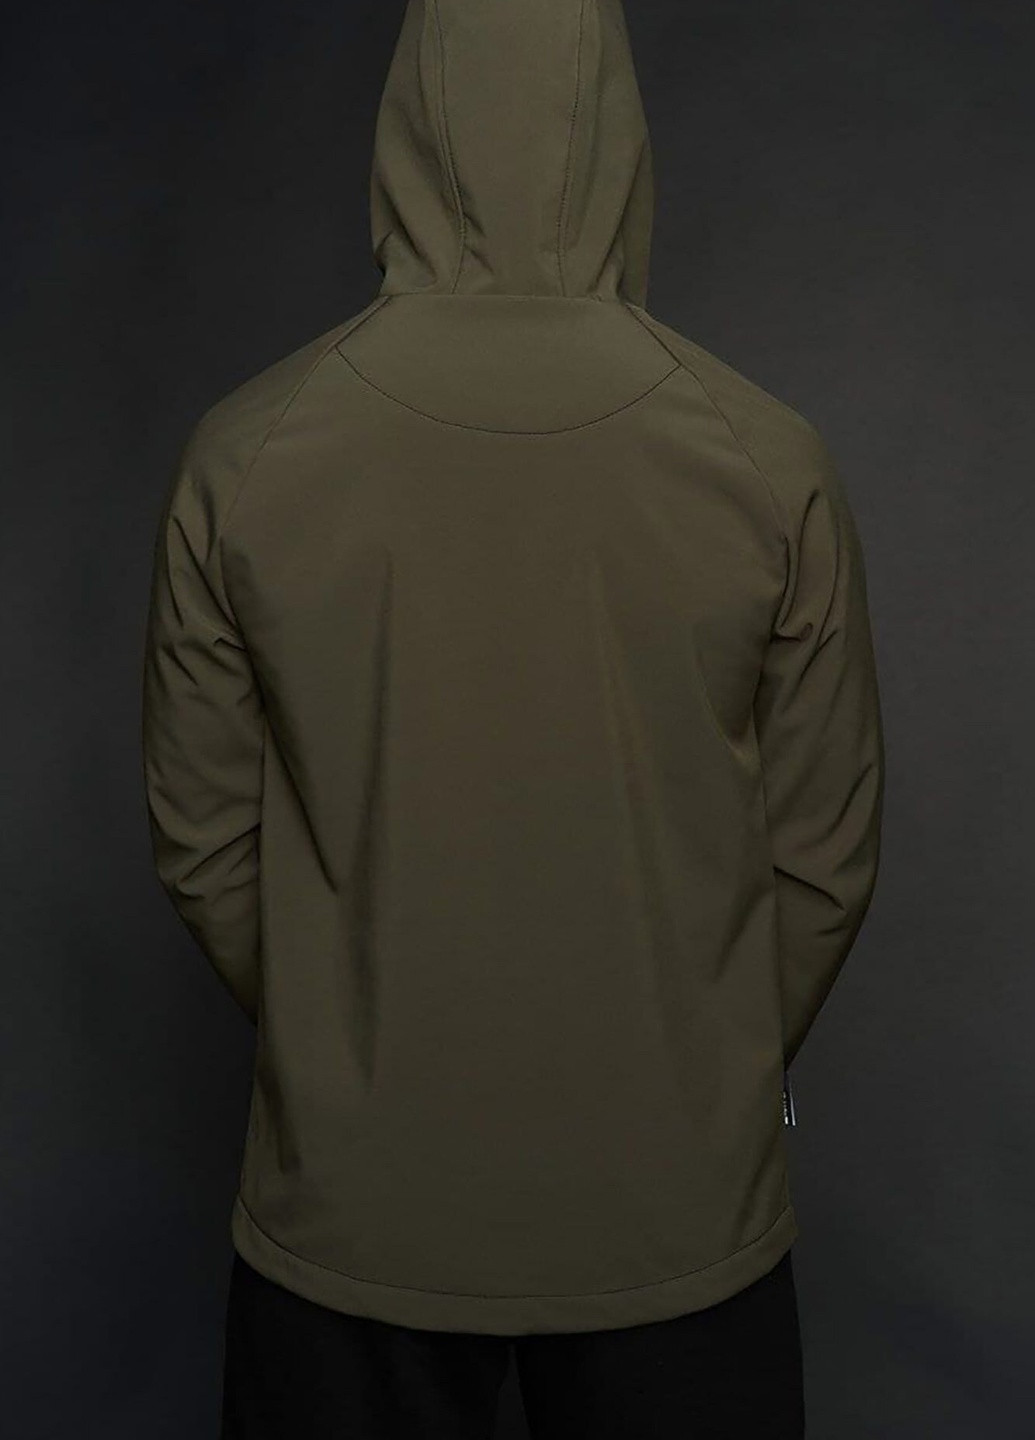 Зеленая демисезонная куртка мужская protection soft shell Custom Wear